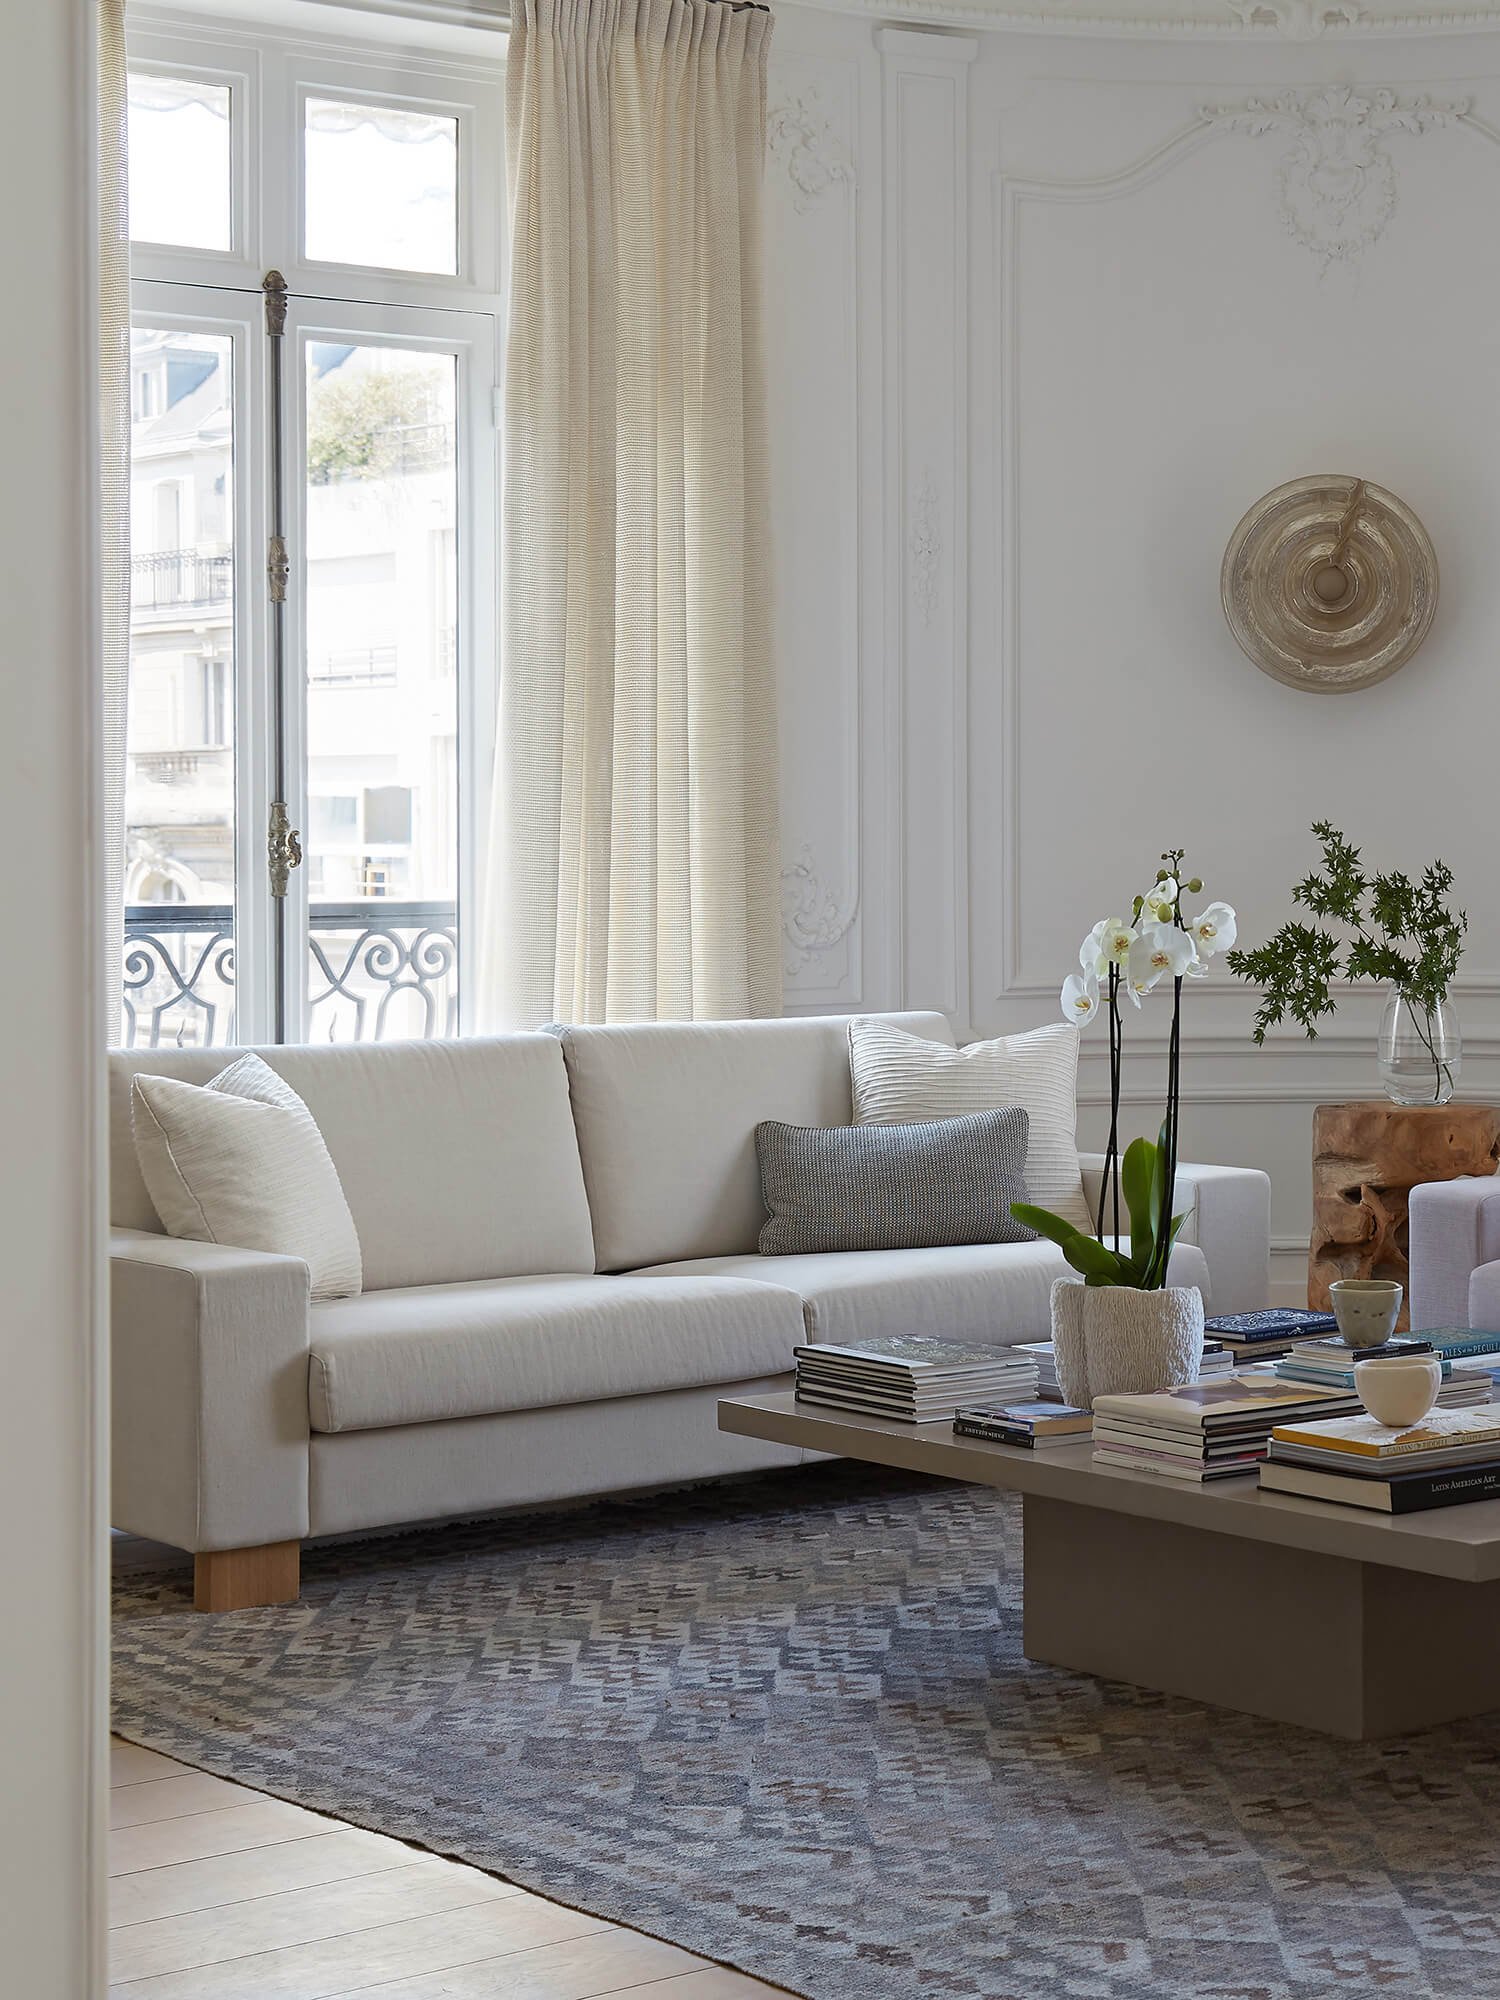 lichelle-silvestry-interiors-paris-designer-living-room-project-trocadero.jpg